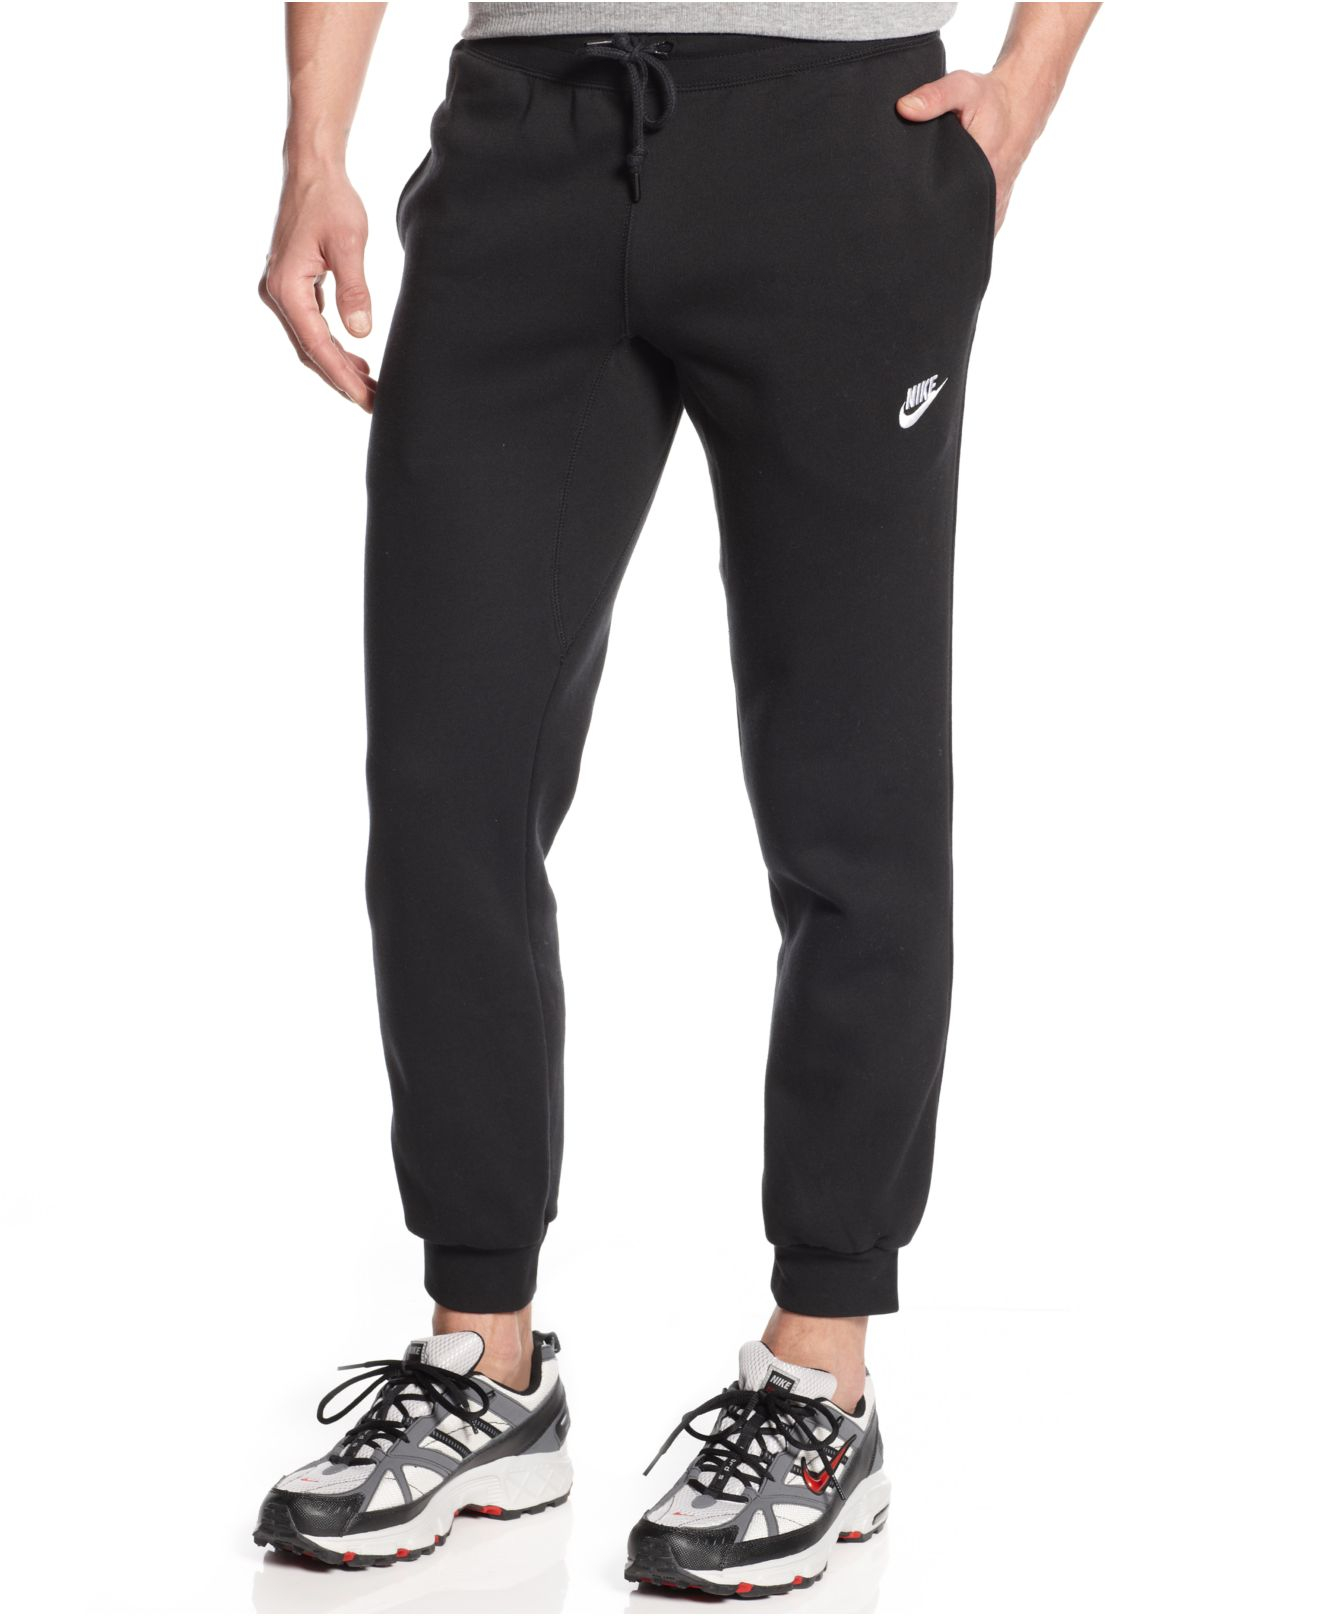 Nike Fleece Men's Aw77 Cuffed Joggers in Black/White (Black) for Men - Lyst